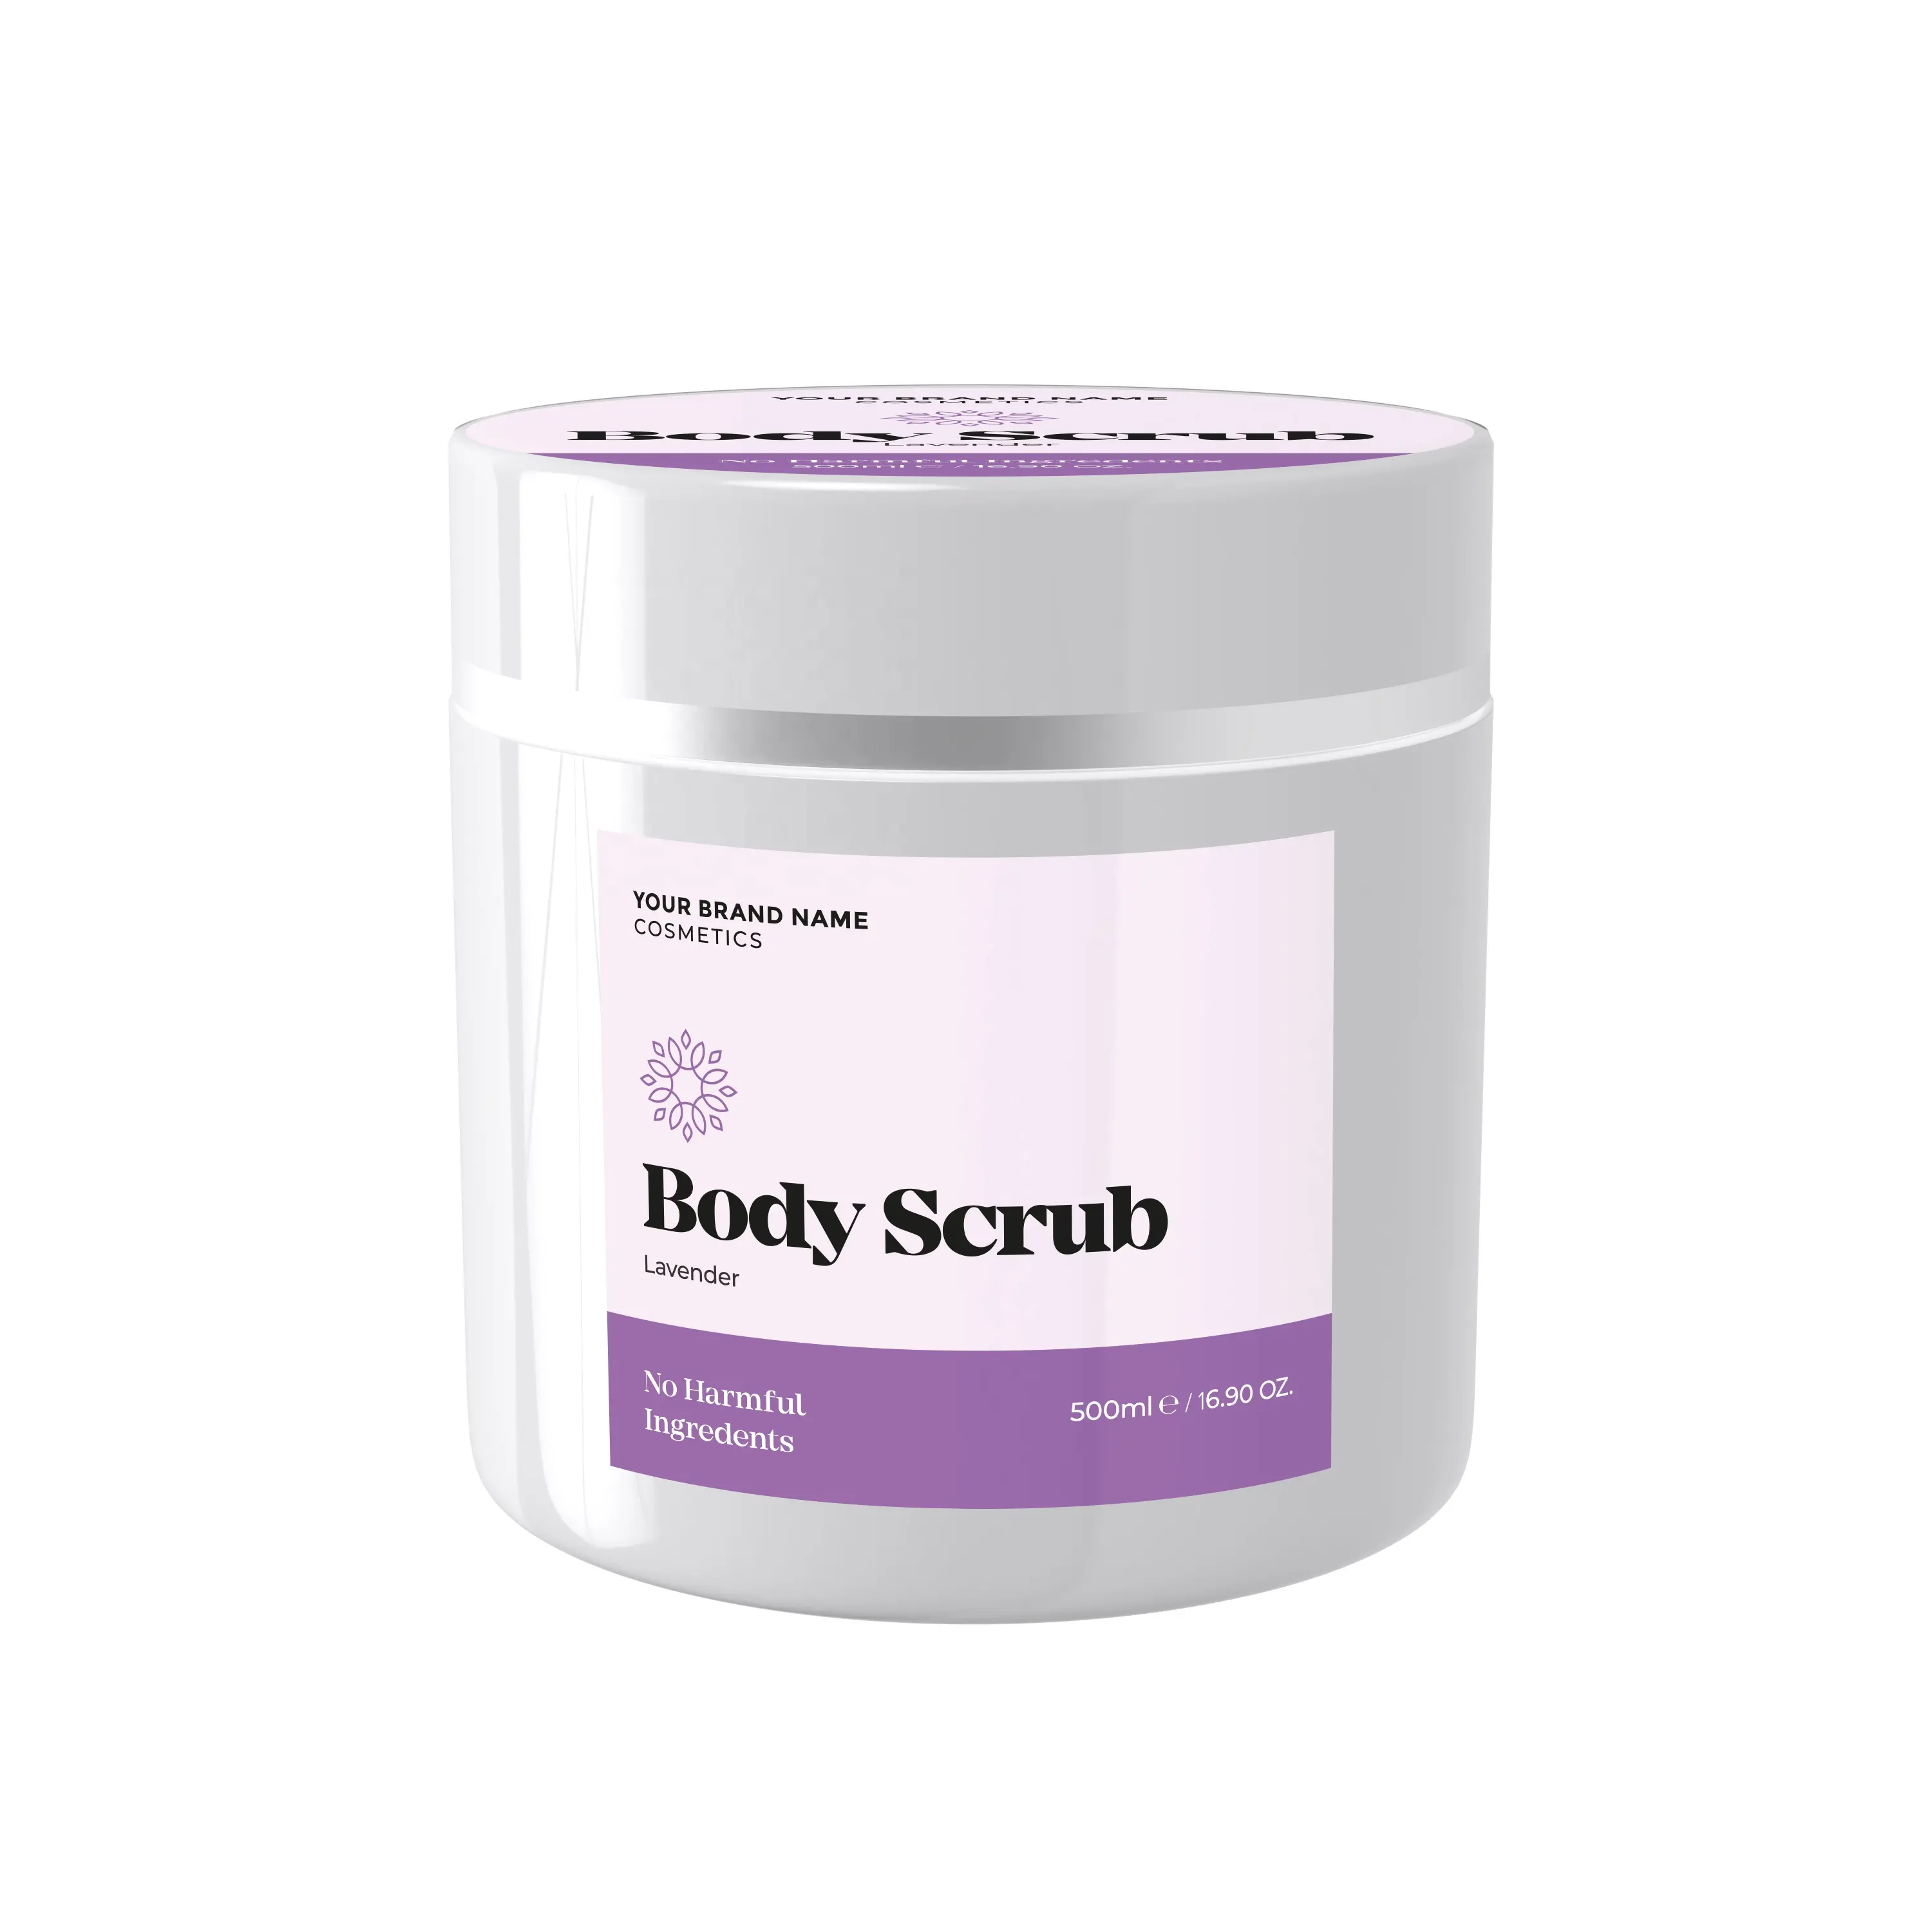 Exfoliating Body Scrub Lavender | Natural Product | Private Label | Wholesale | Bulk | Custom Formulation | Made in the EU